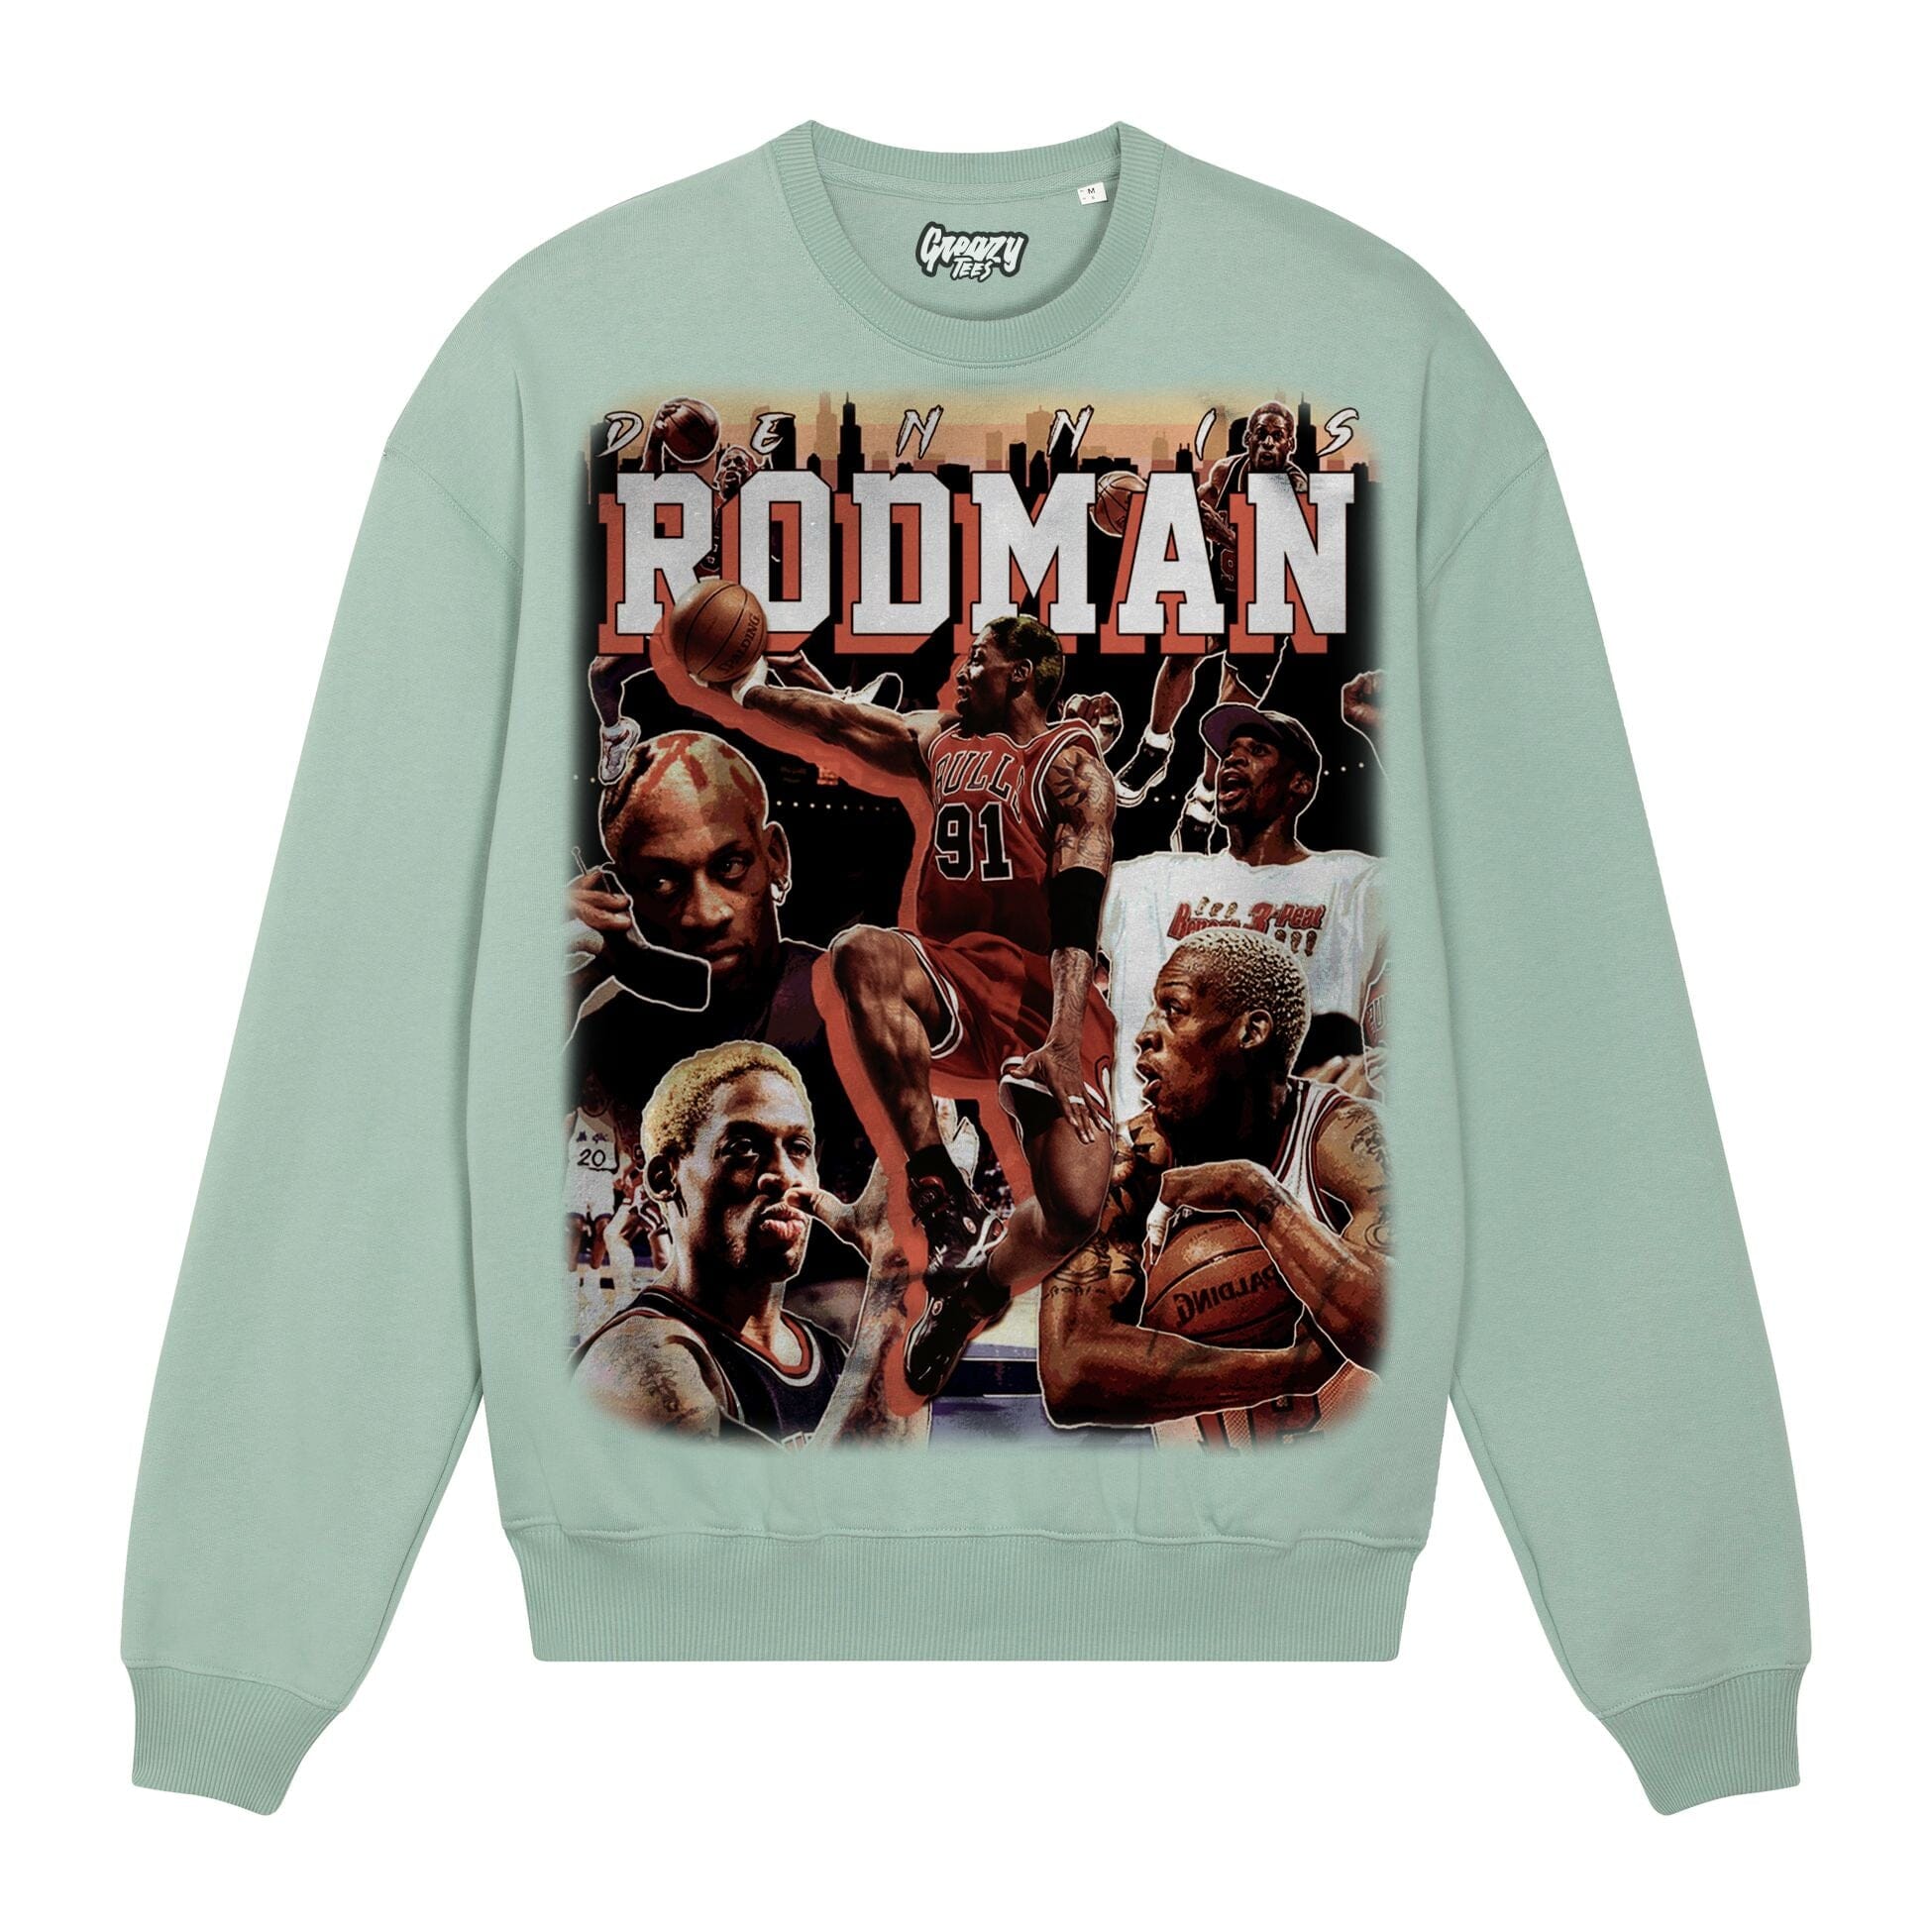 Dennis Rodman Sweatshirt Sweatshirt Greazy Tees XS Mint Green Oversized